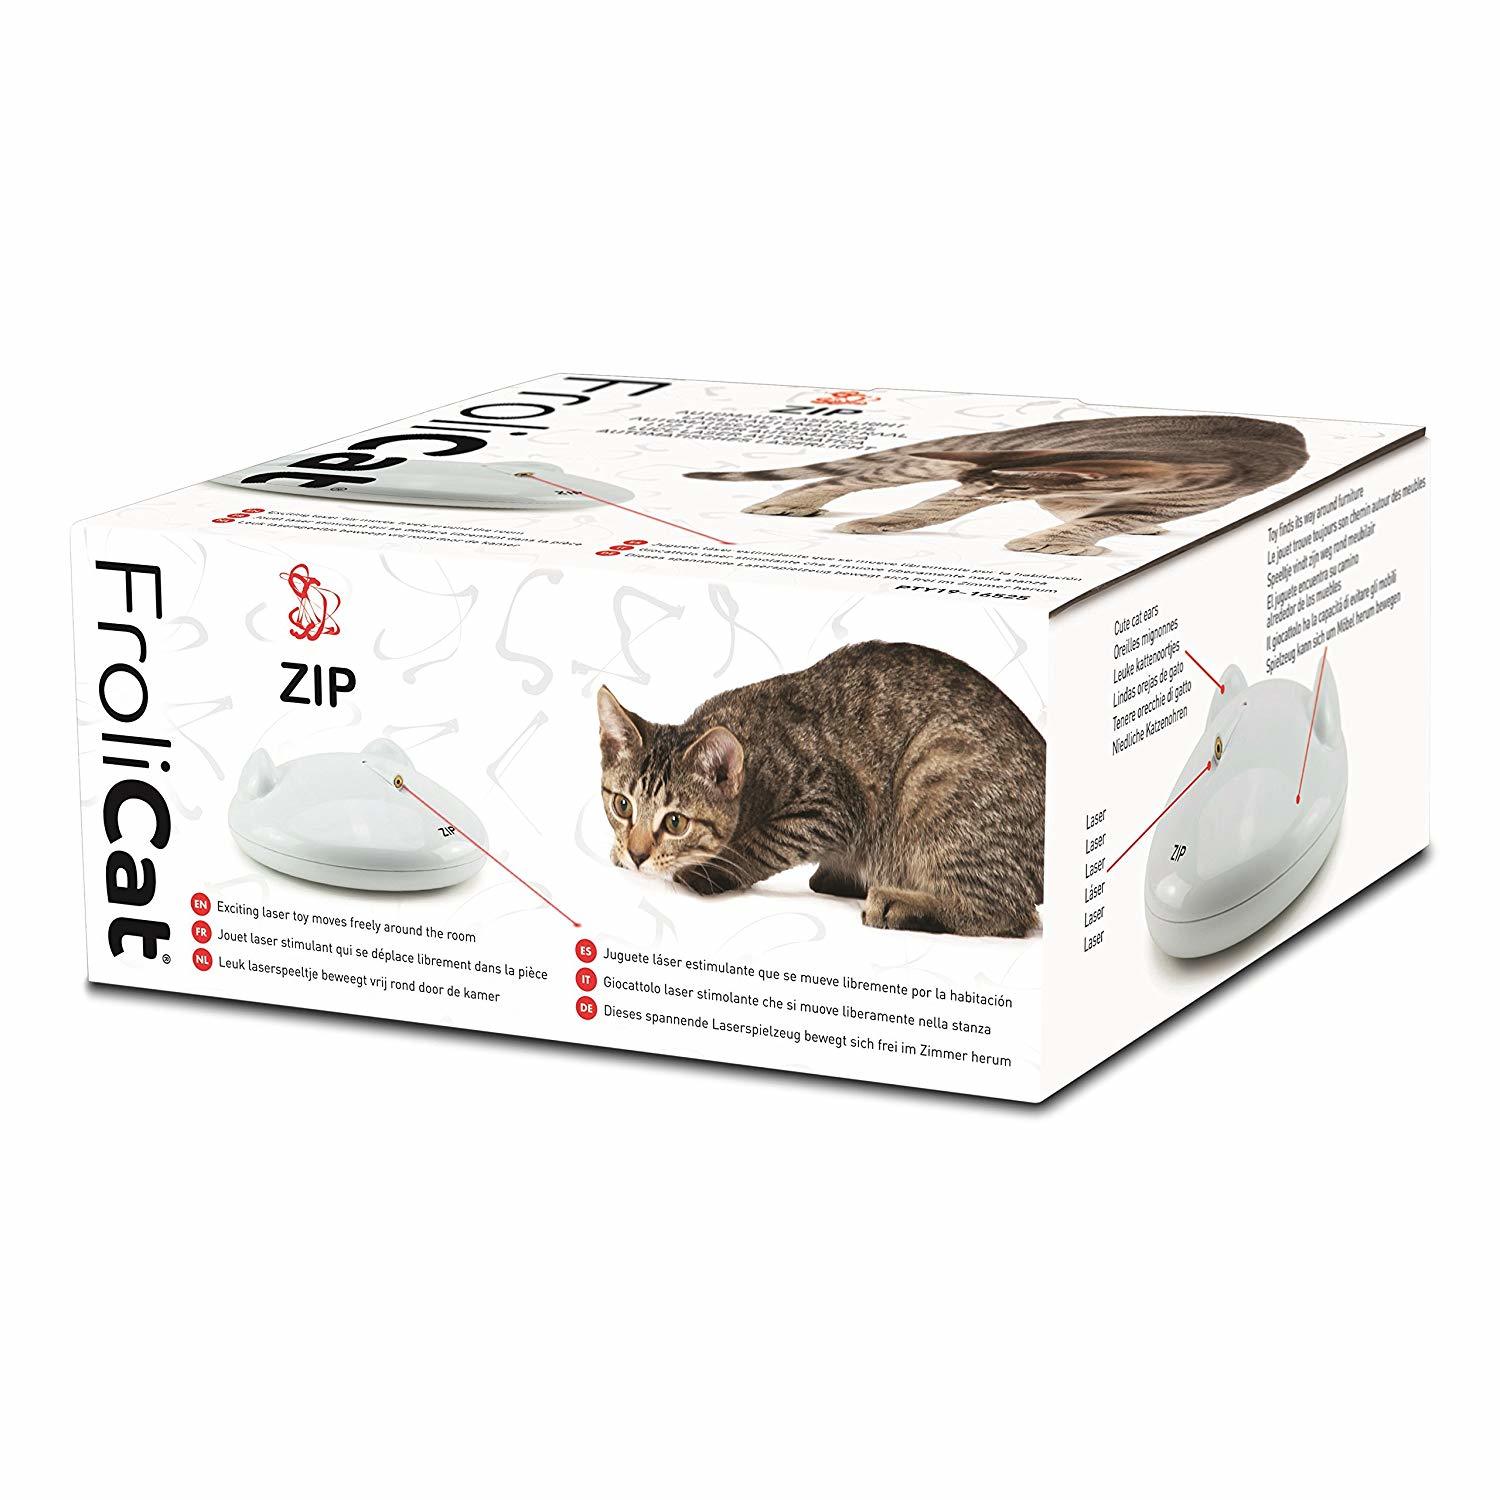 FroliCat ZIP Automatic Laser Light Interactive Cat Toy image 0